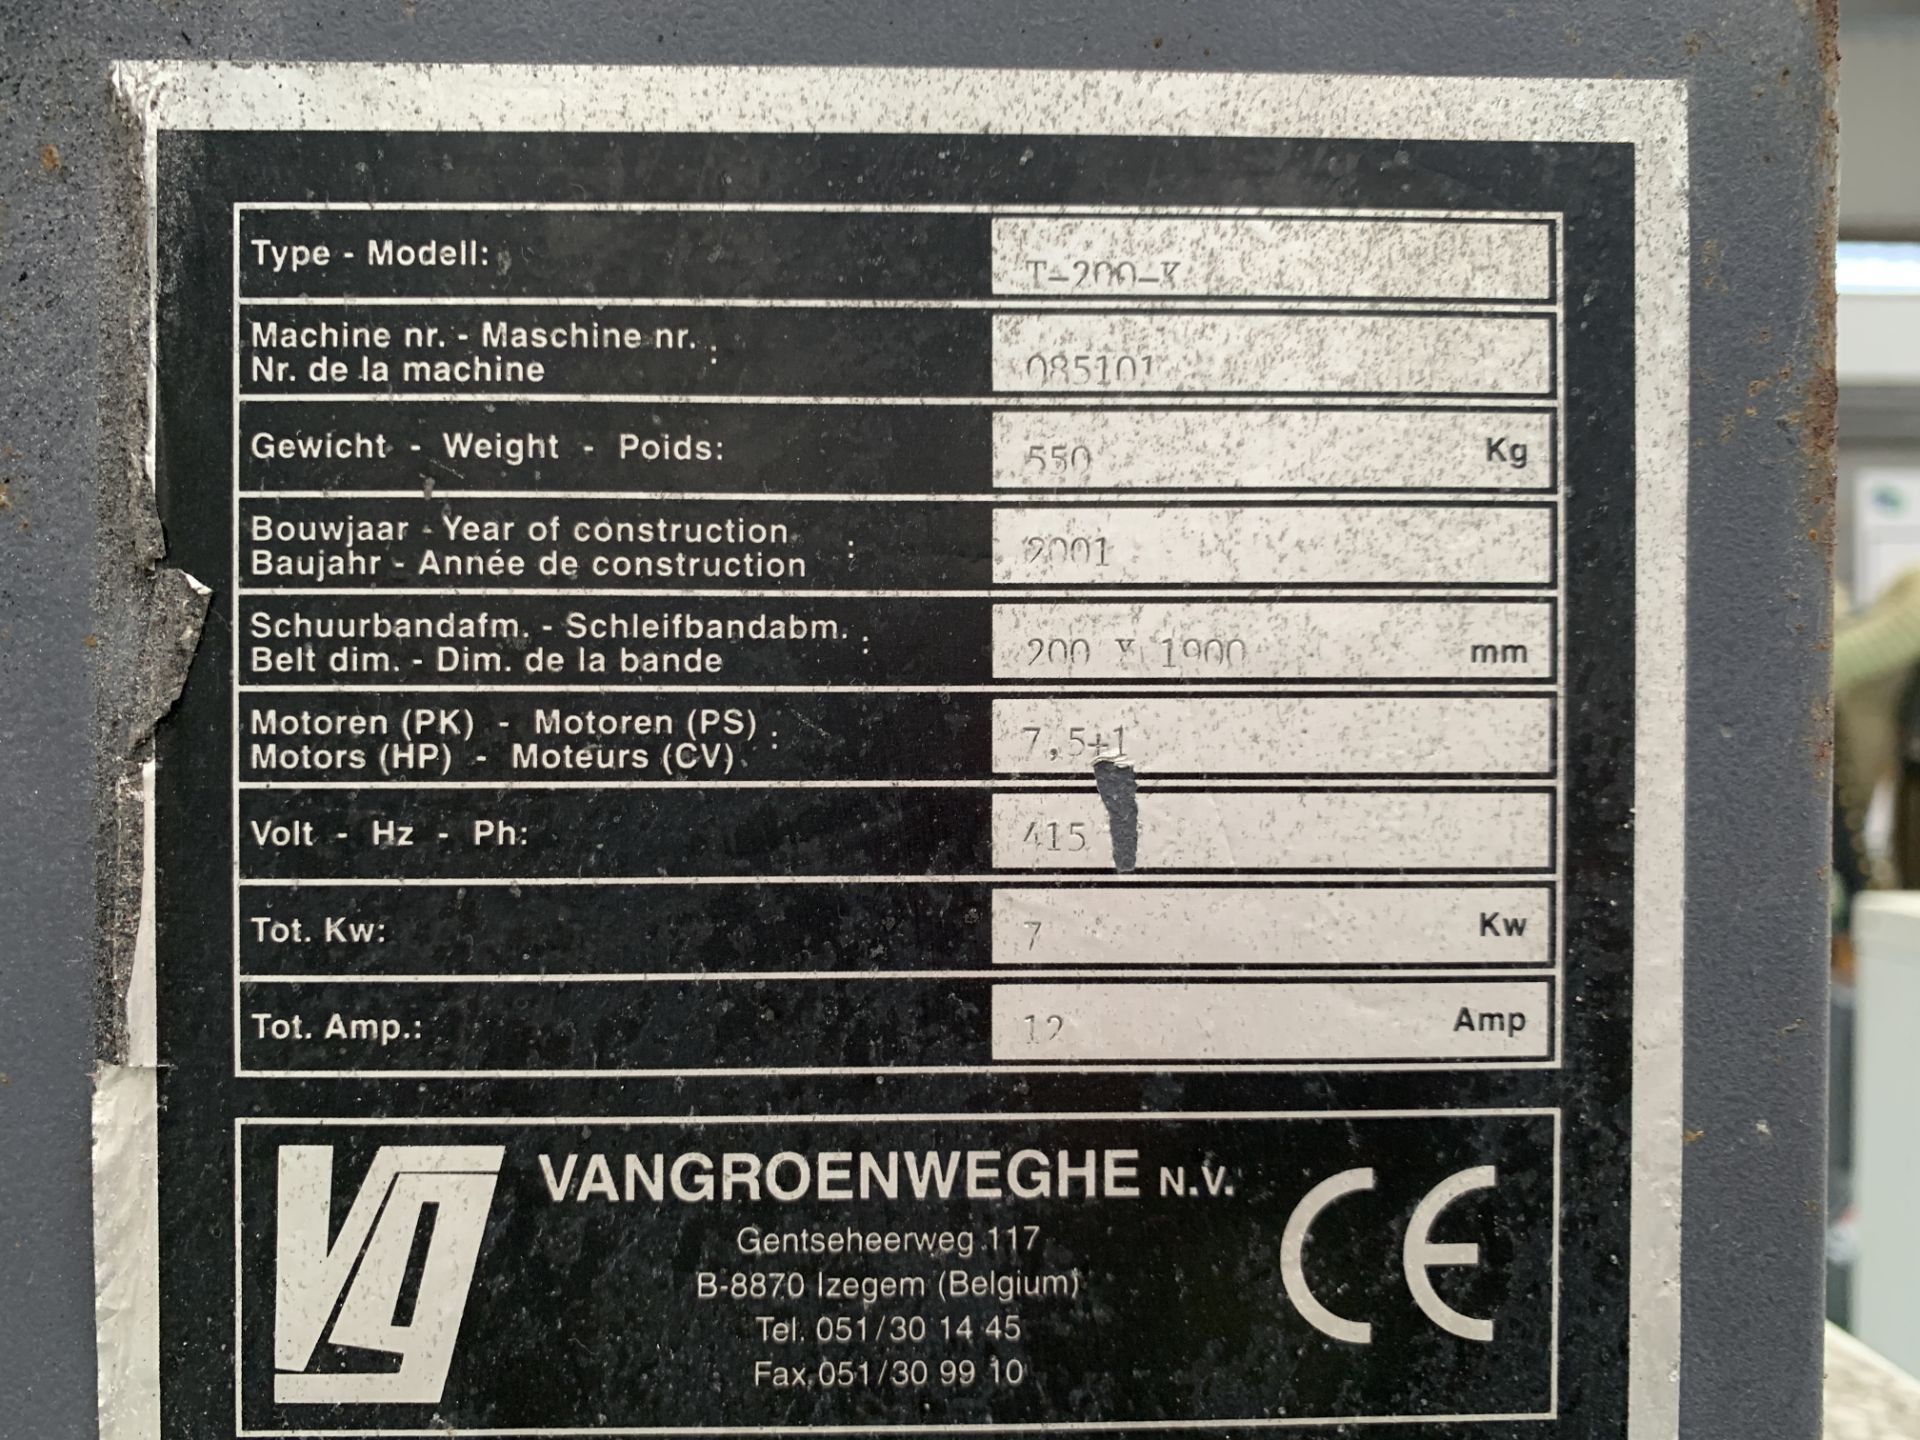 Vangroenweghe T-200-K Metalworking Linisher - Image 4 of 7